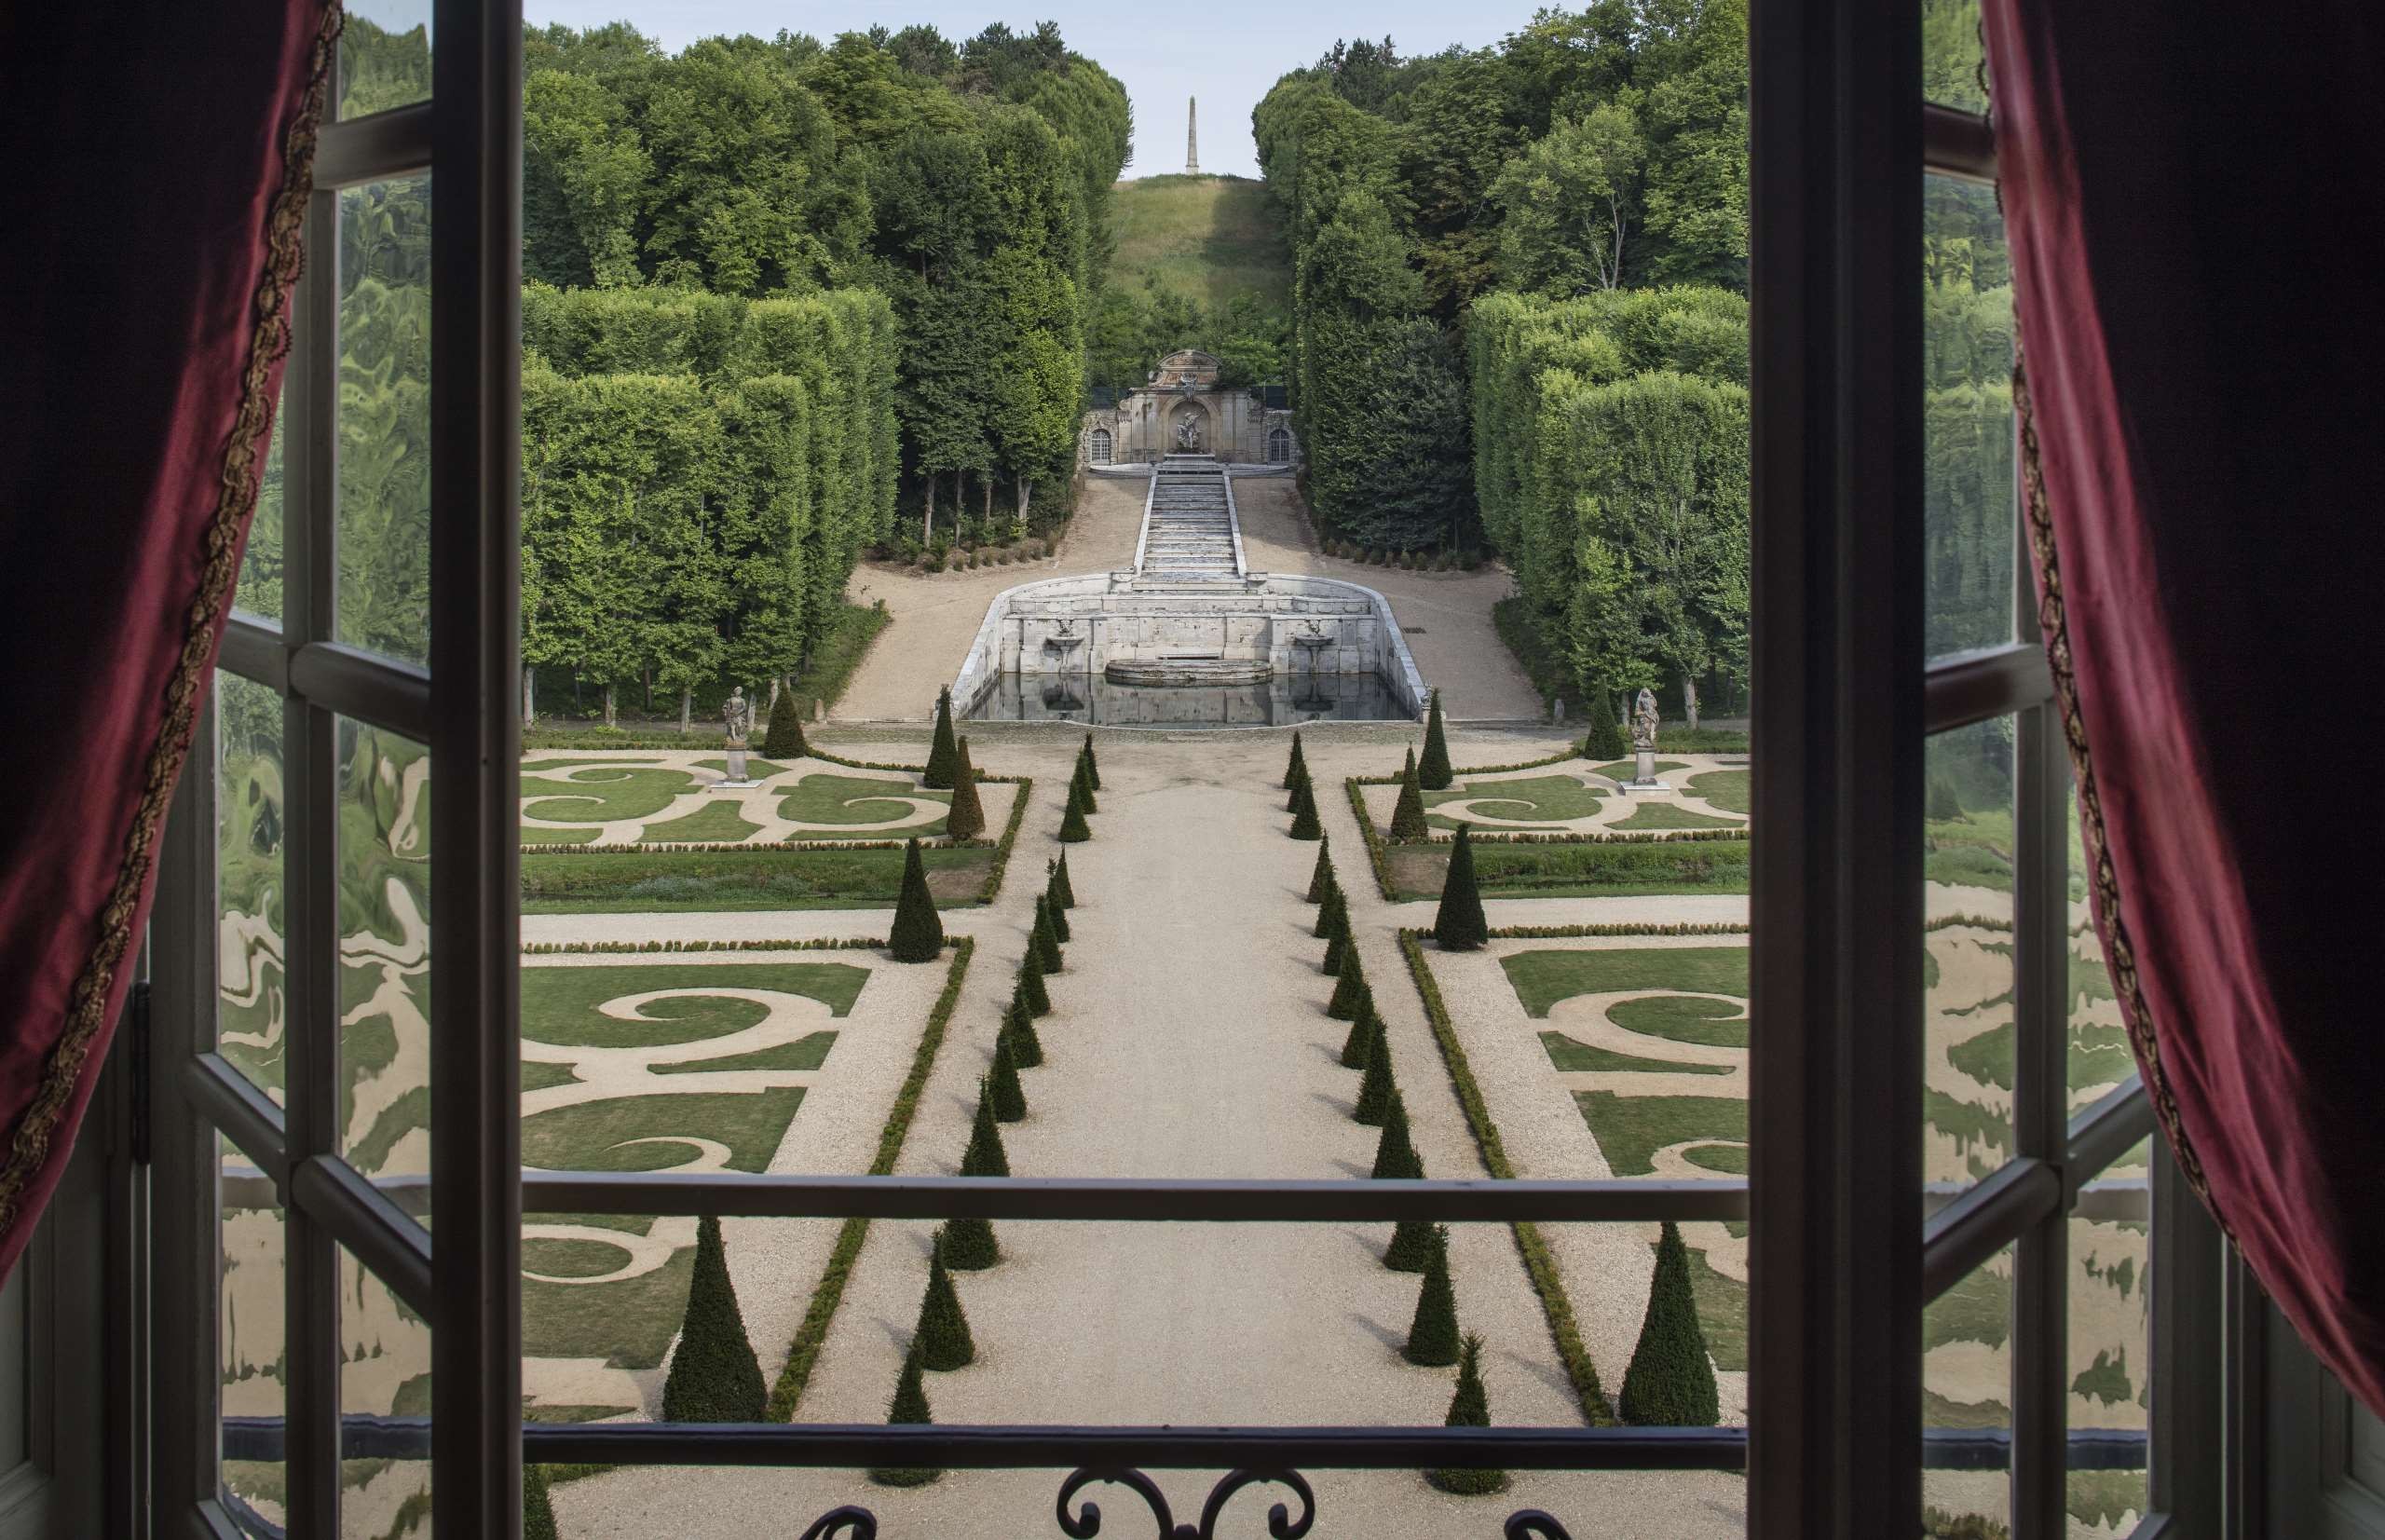 p6-chateau-de-villette-the-splendor-of-french-decor-publishe-6fodb.jpg